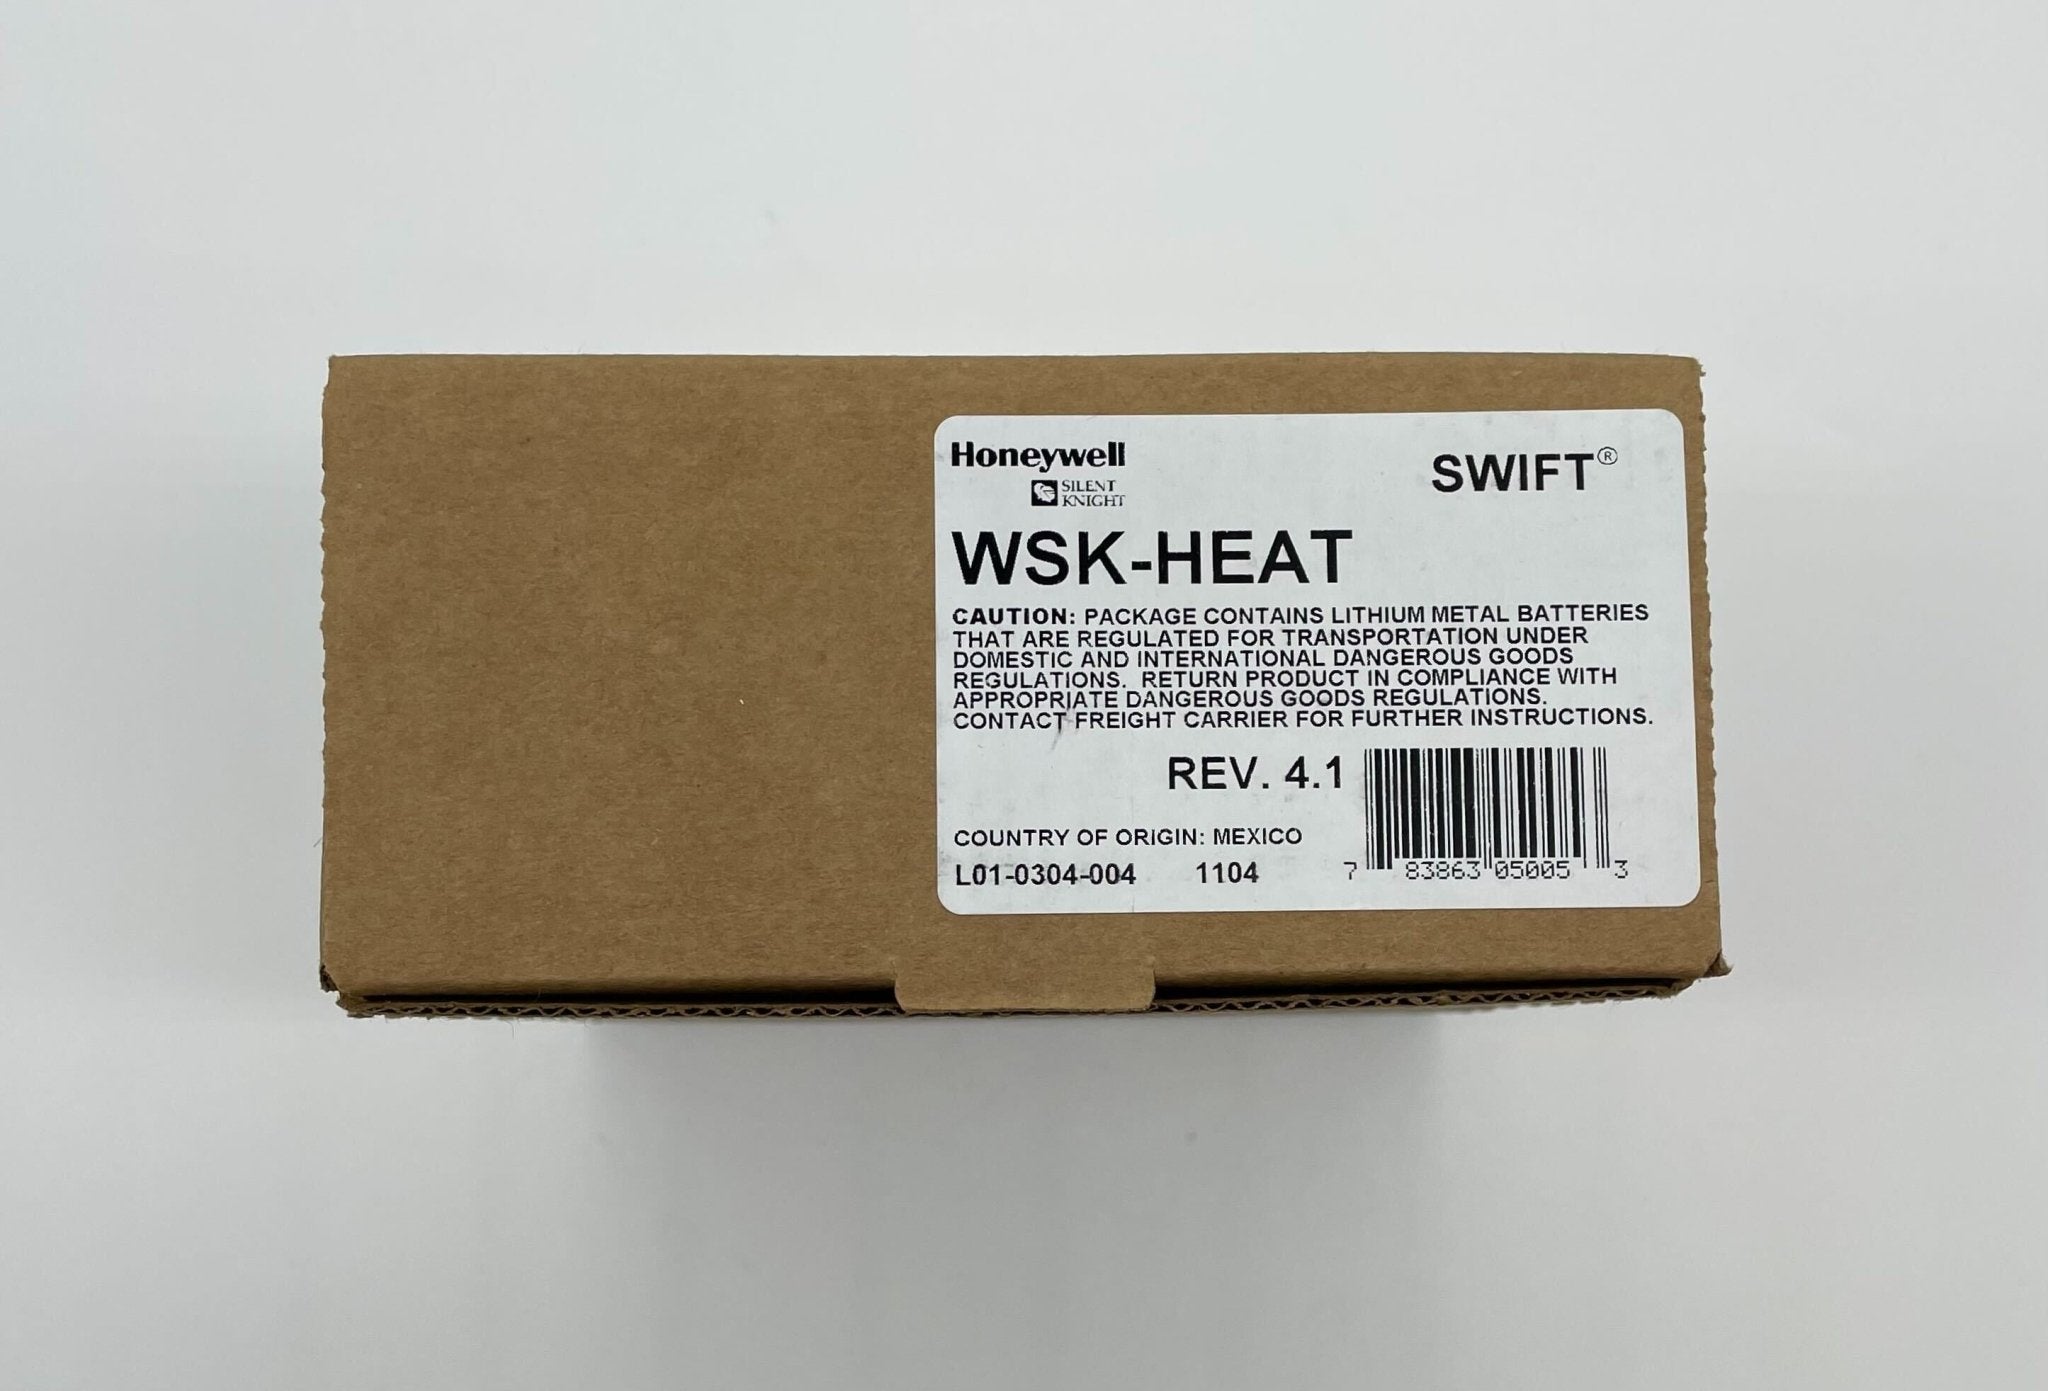 Silent Knight WSK-HEAT - The Fire Alarm Supplier